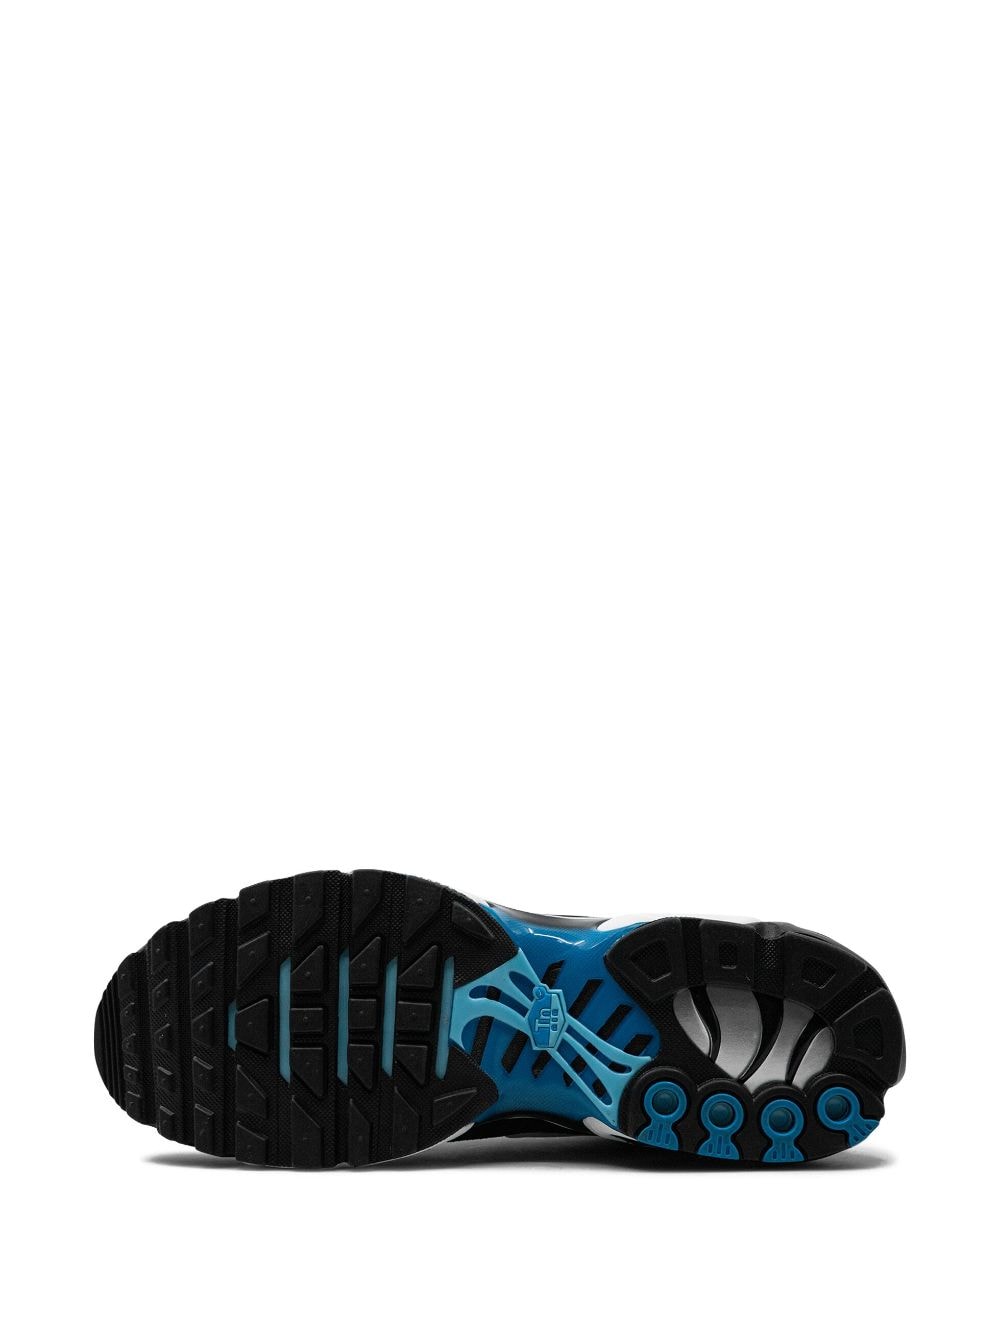 Nike TN PLUS Aquarius Blue